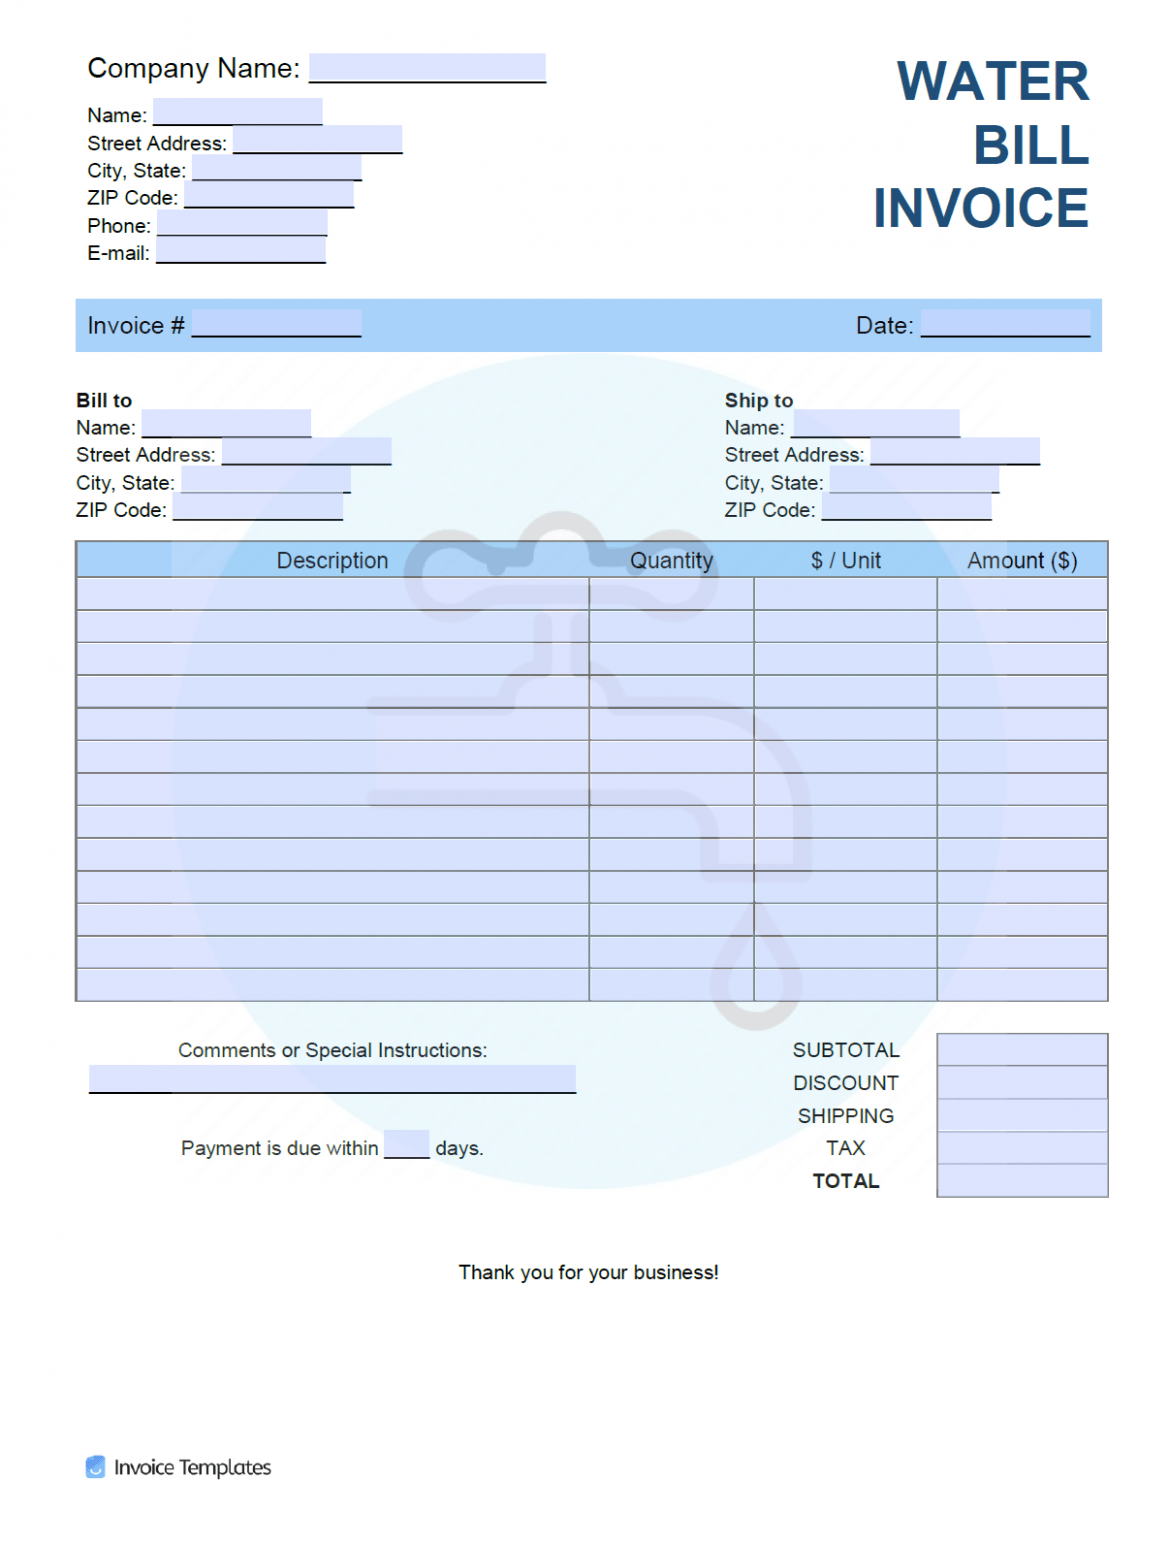 Printable Water Bill Invoice Template PDF